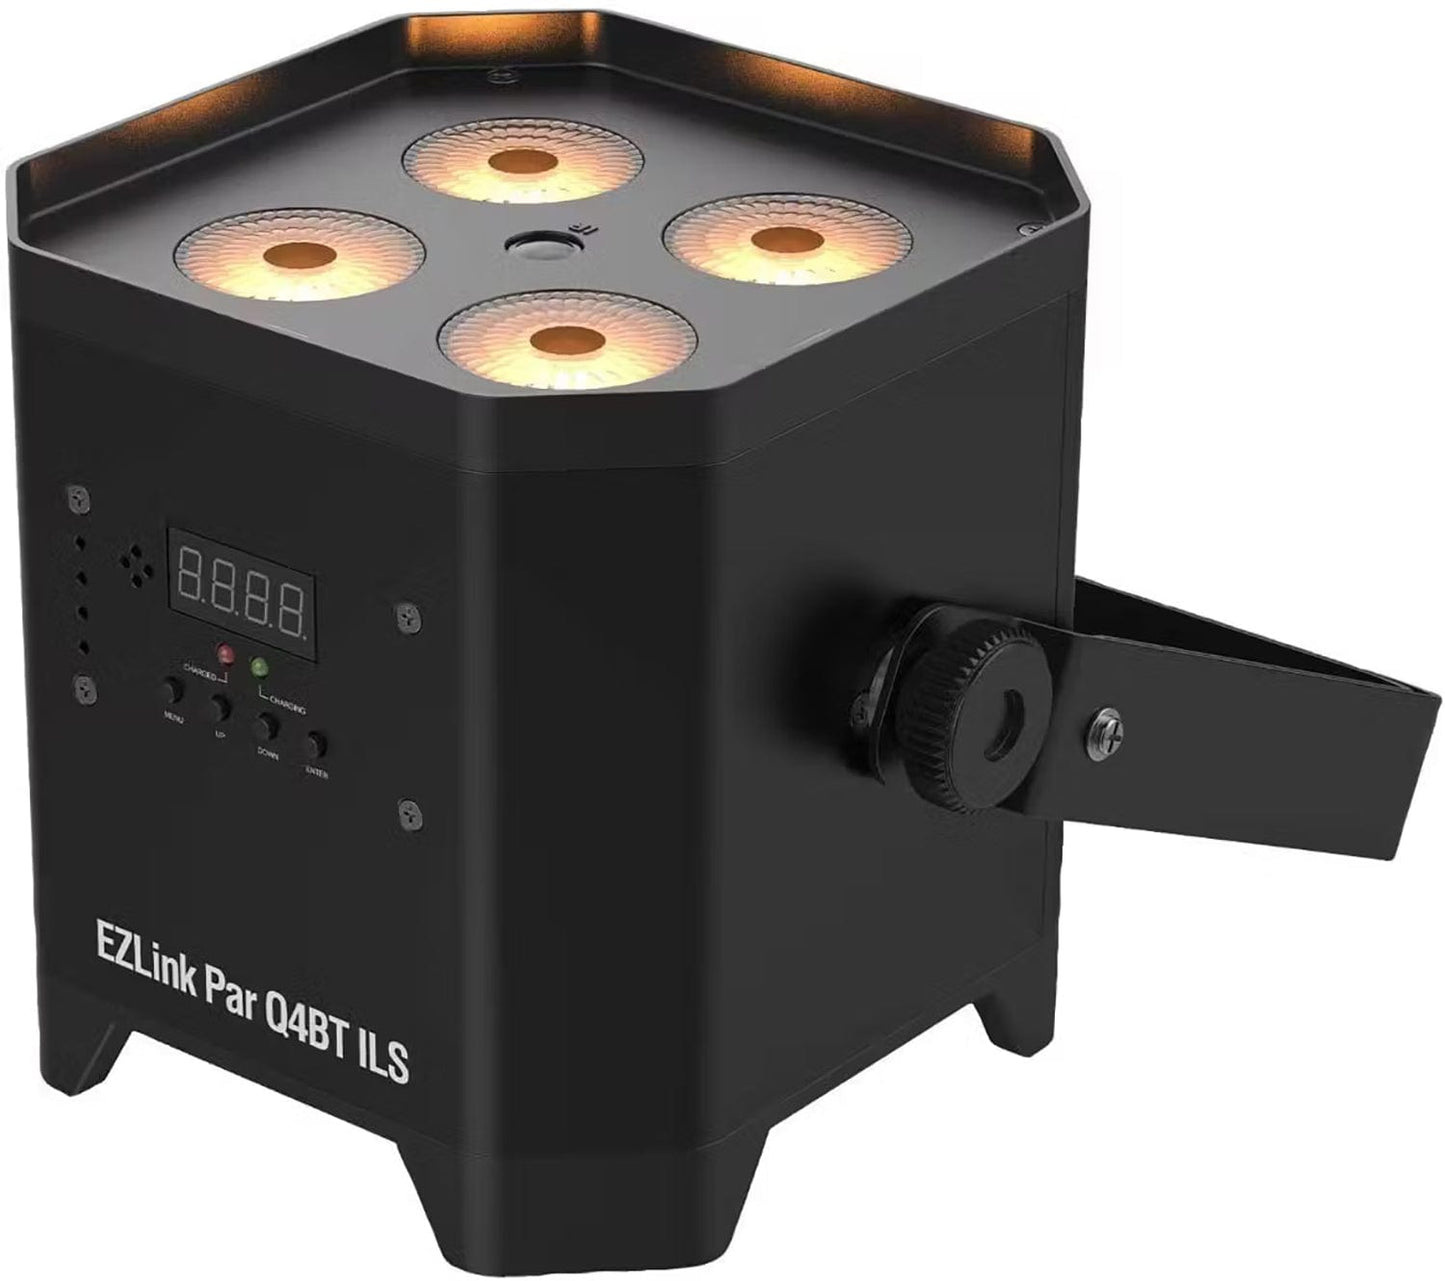 Chauvet DJ EZLINK PAR Q4BT ILS Quad Color (RGBA) LED Par Wash Light - Battery Operated - Blootooth - PSSL ProSound and Stage Lighting